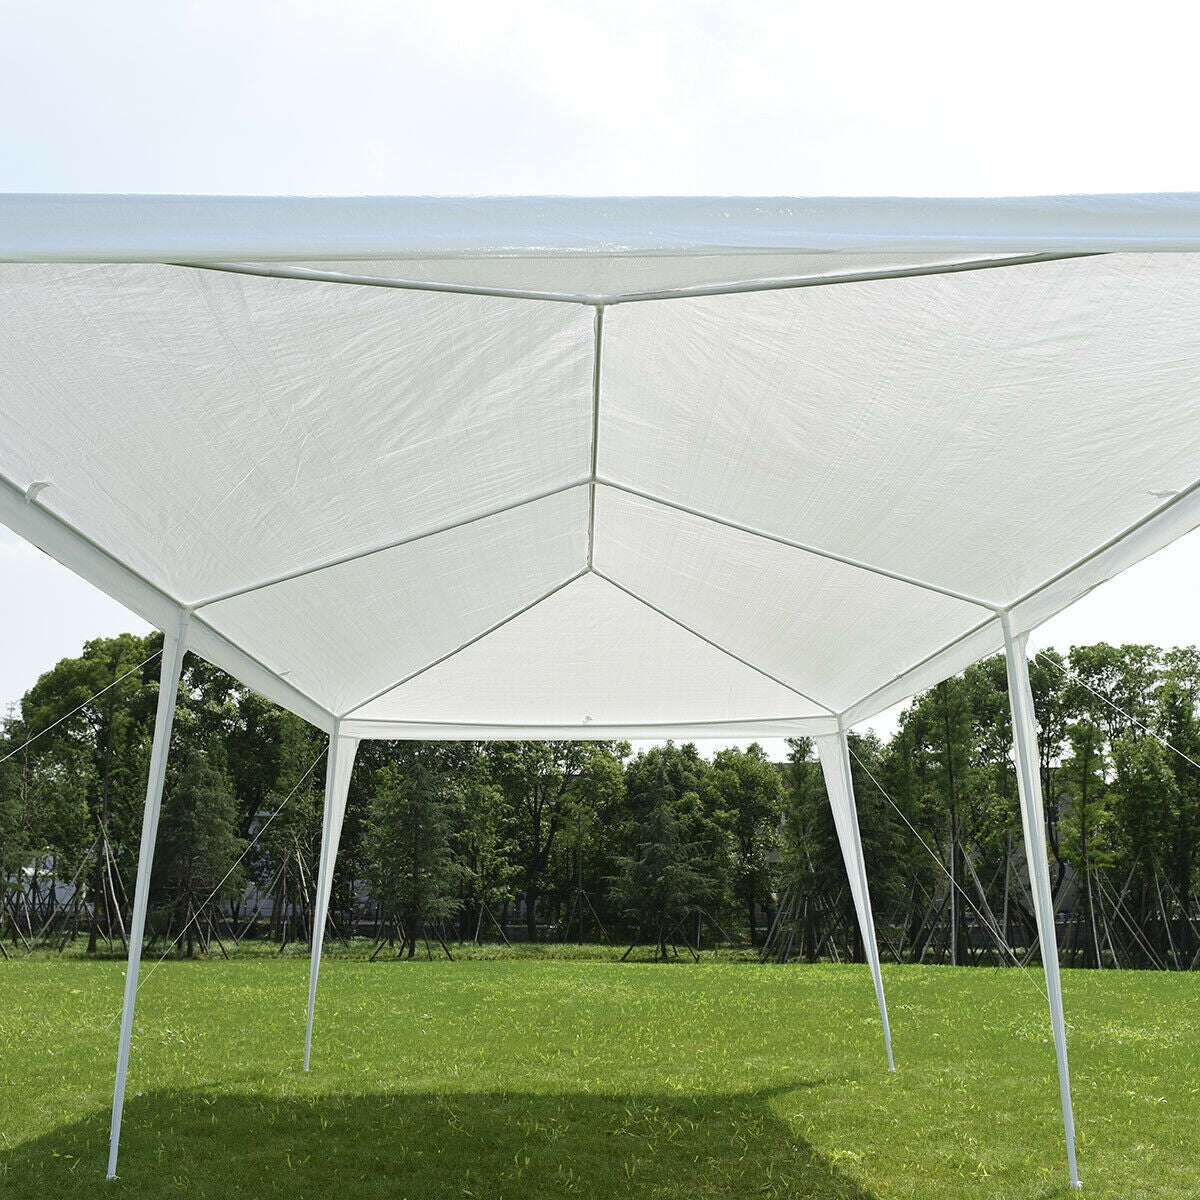 10' x 20' Outdoor Gazebo Party Wedding Camping Canopy Gazebo Pavilion Event Tent